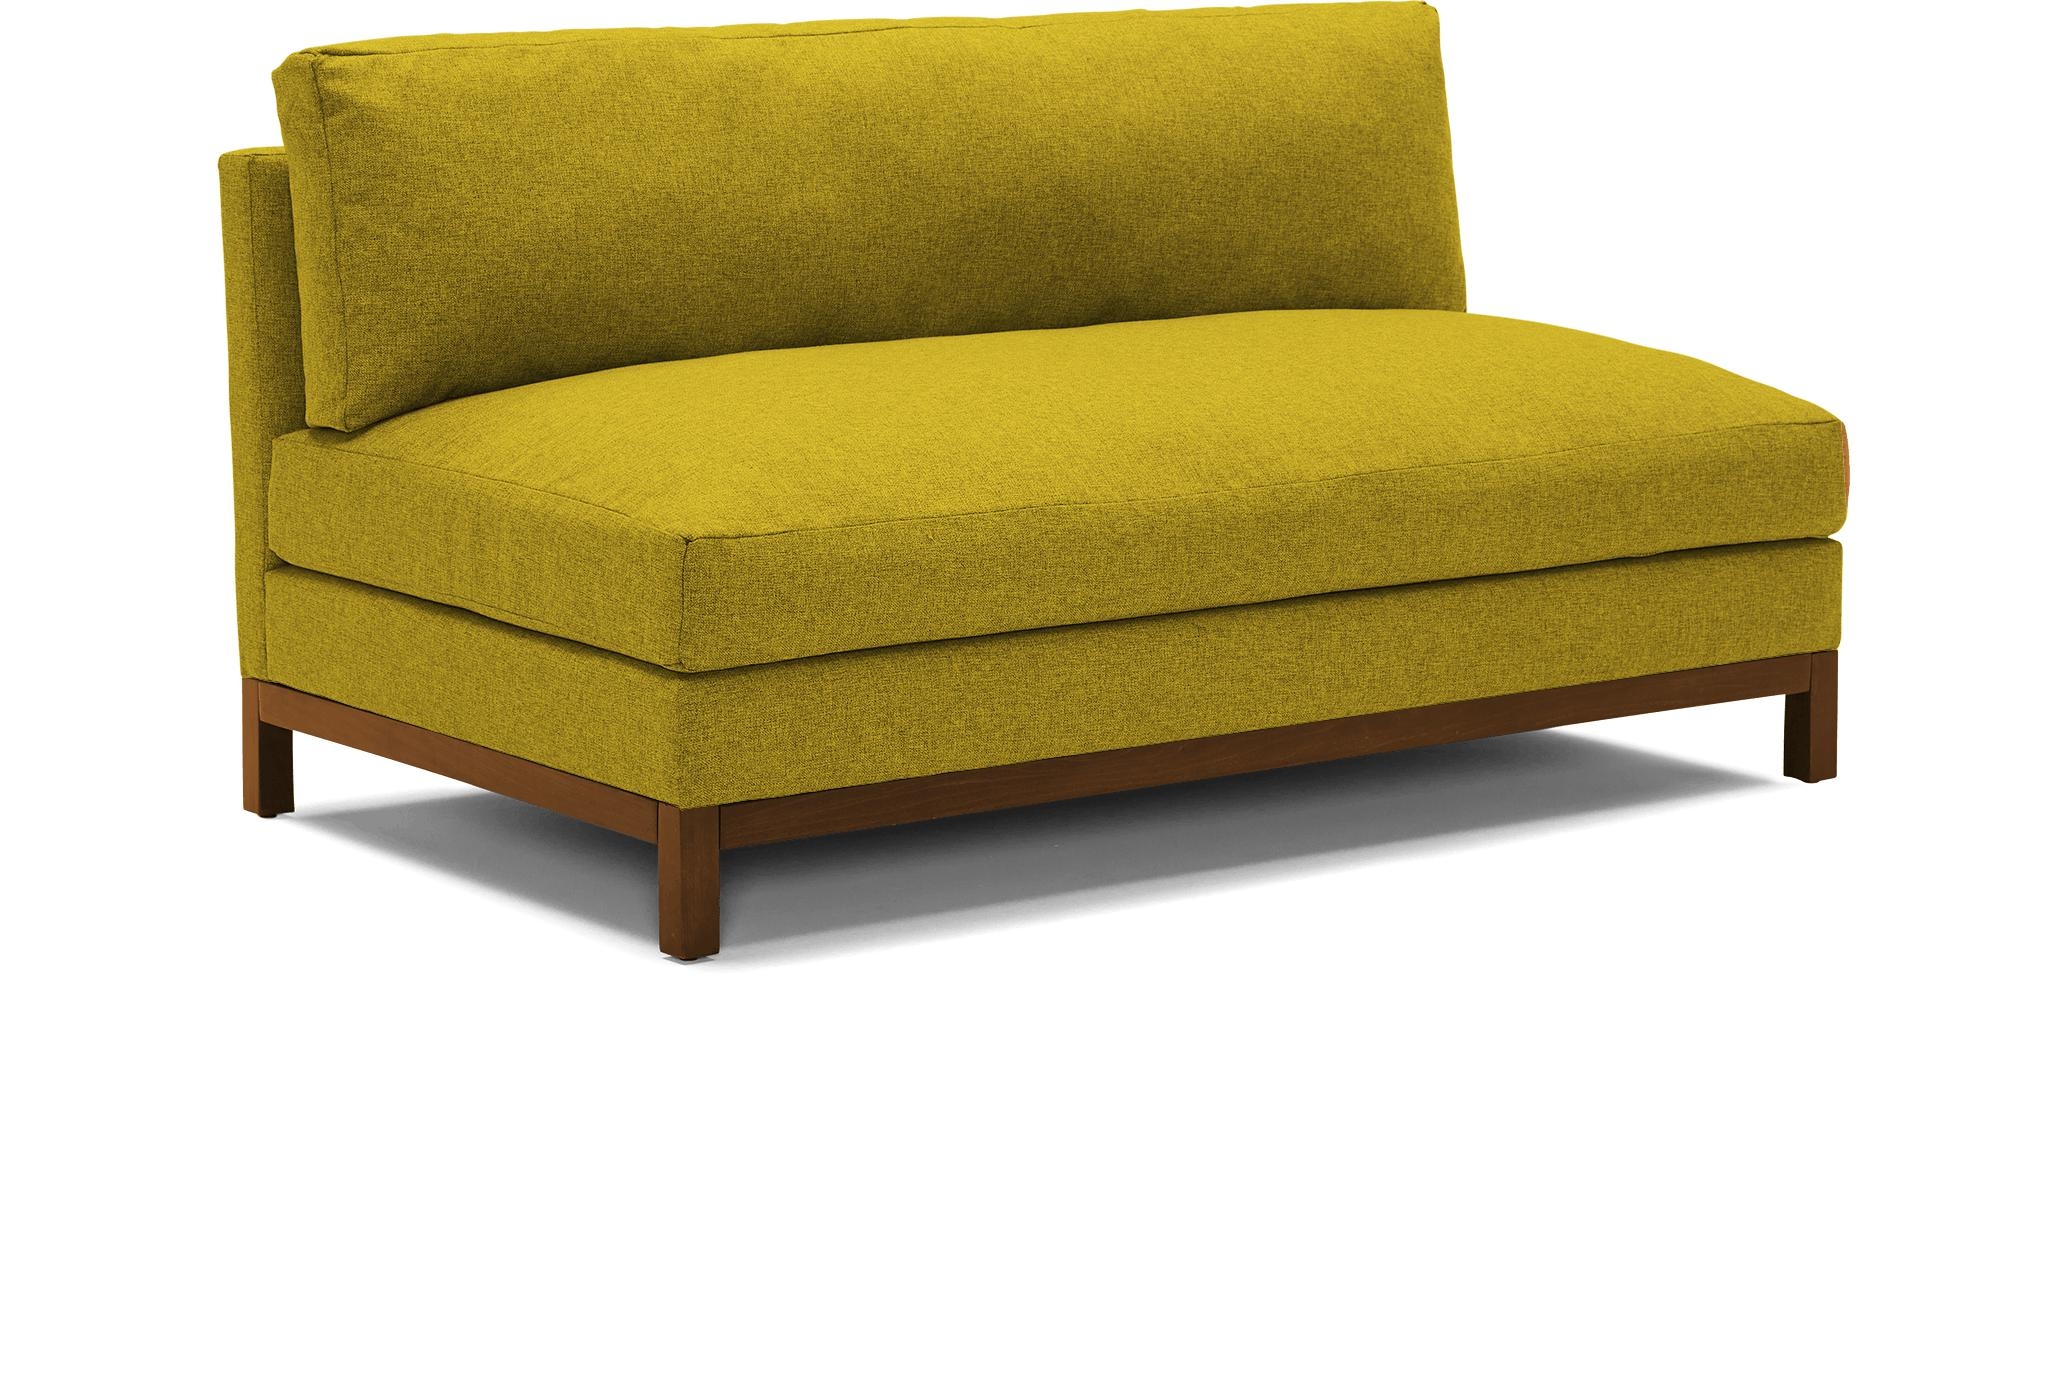 Yellow Arwen Mid Century Modern Armless Sofa - Bloke Goldenrod - Mocha - Image 1